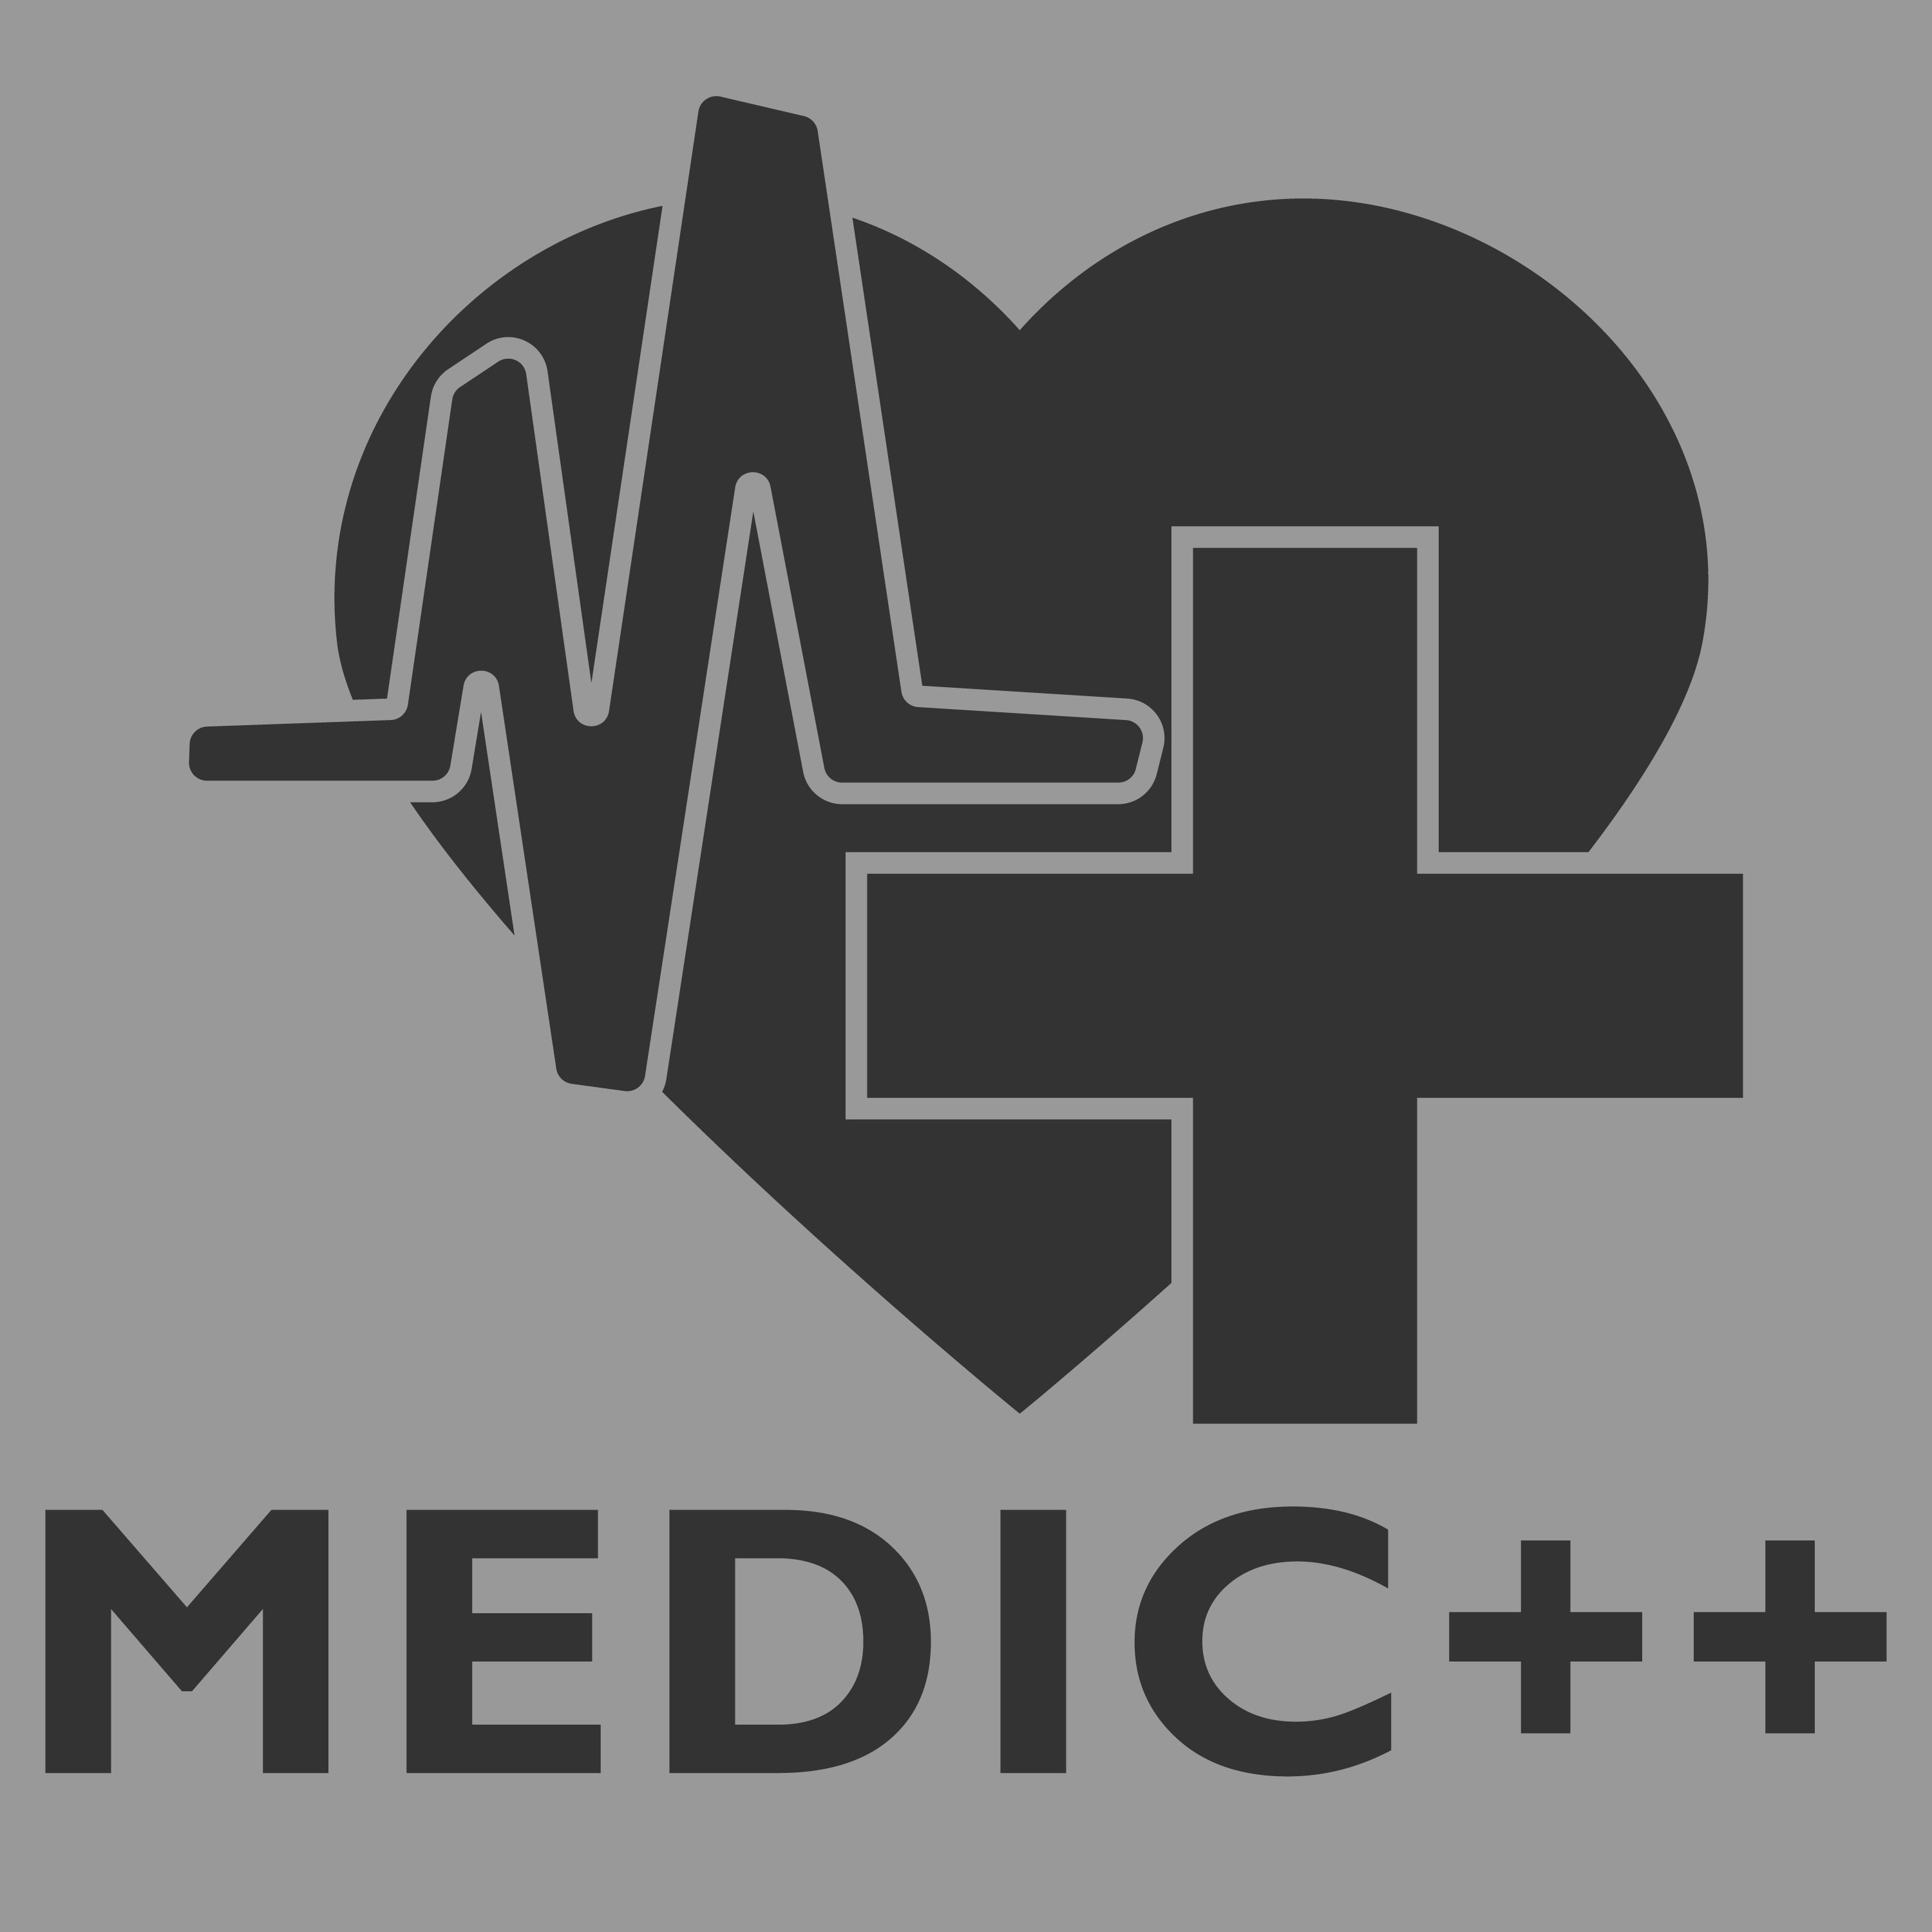 MEDIC++ preview image.